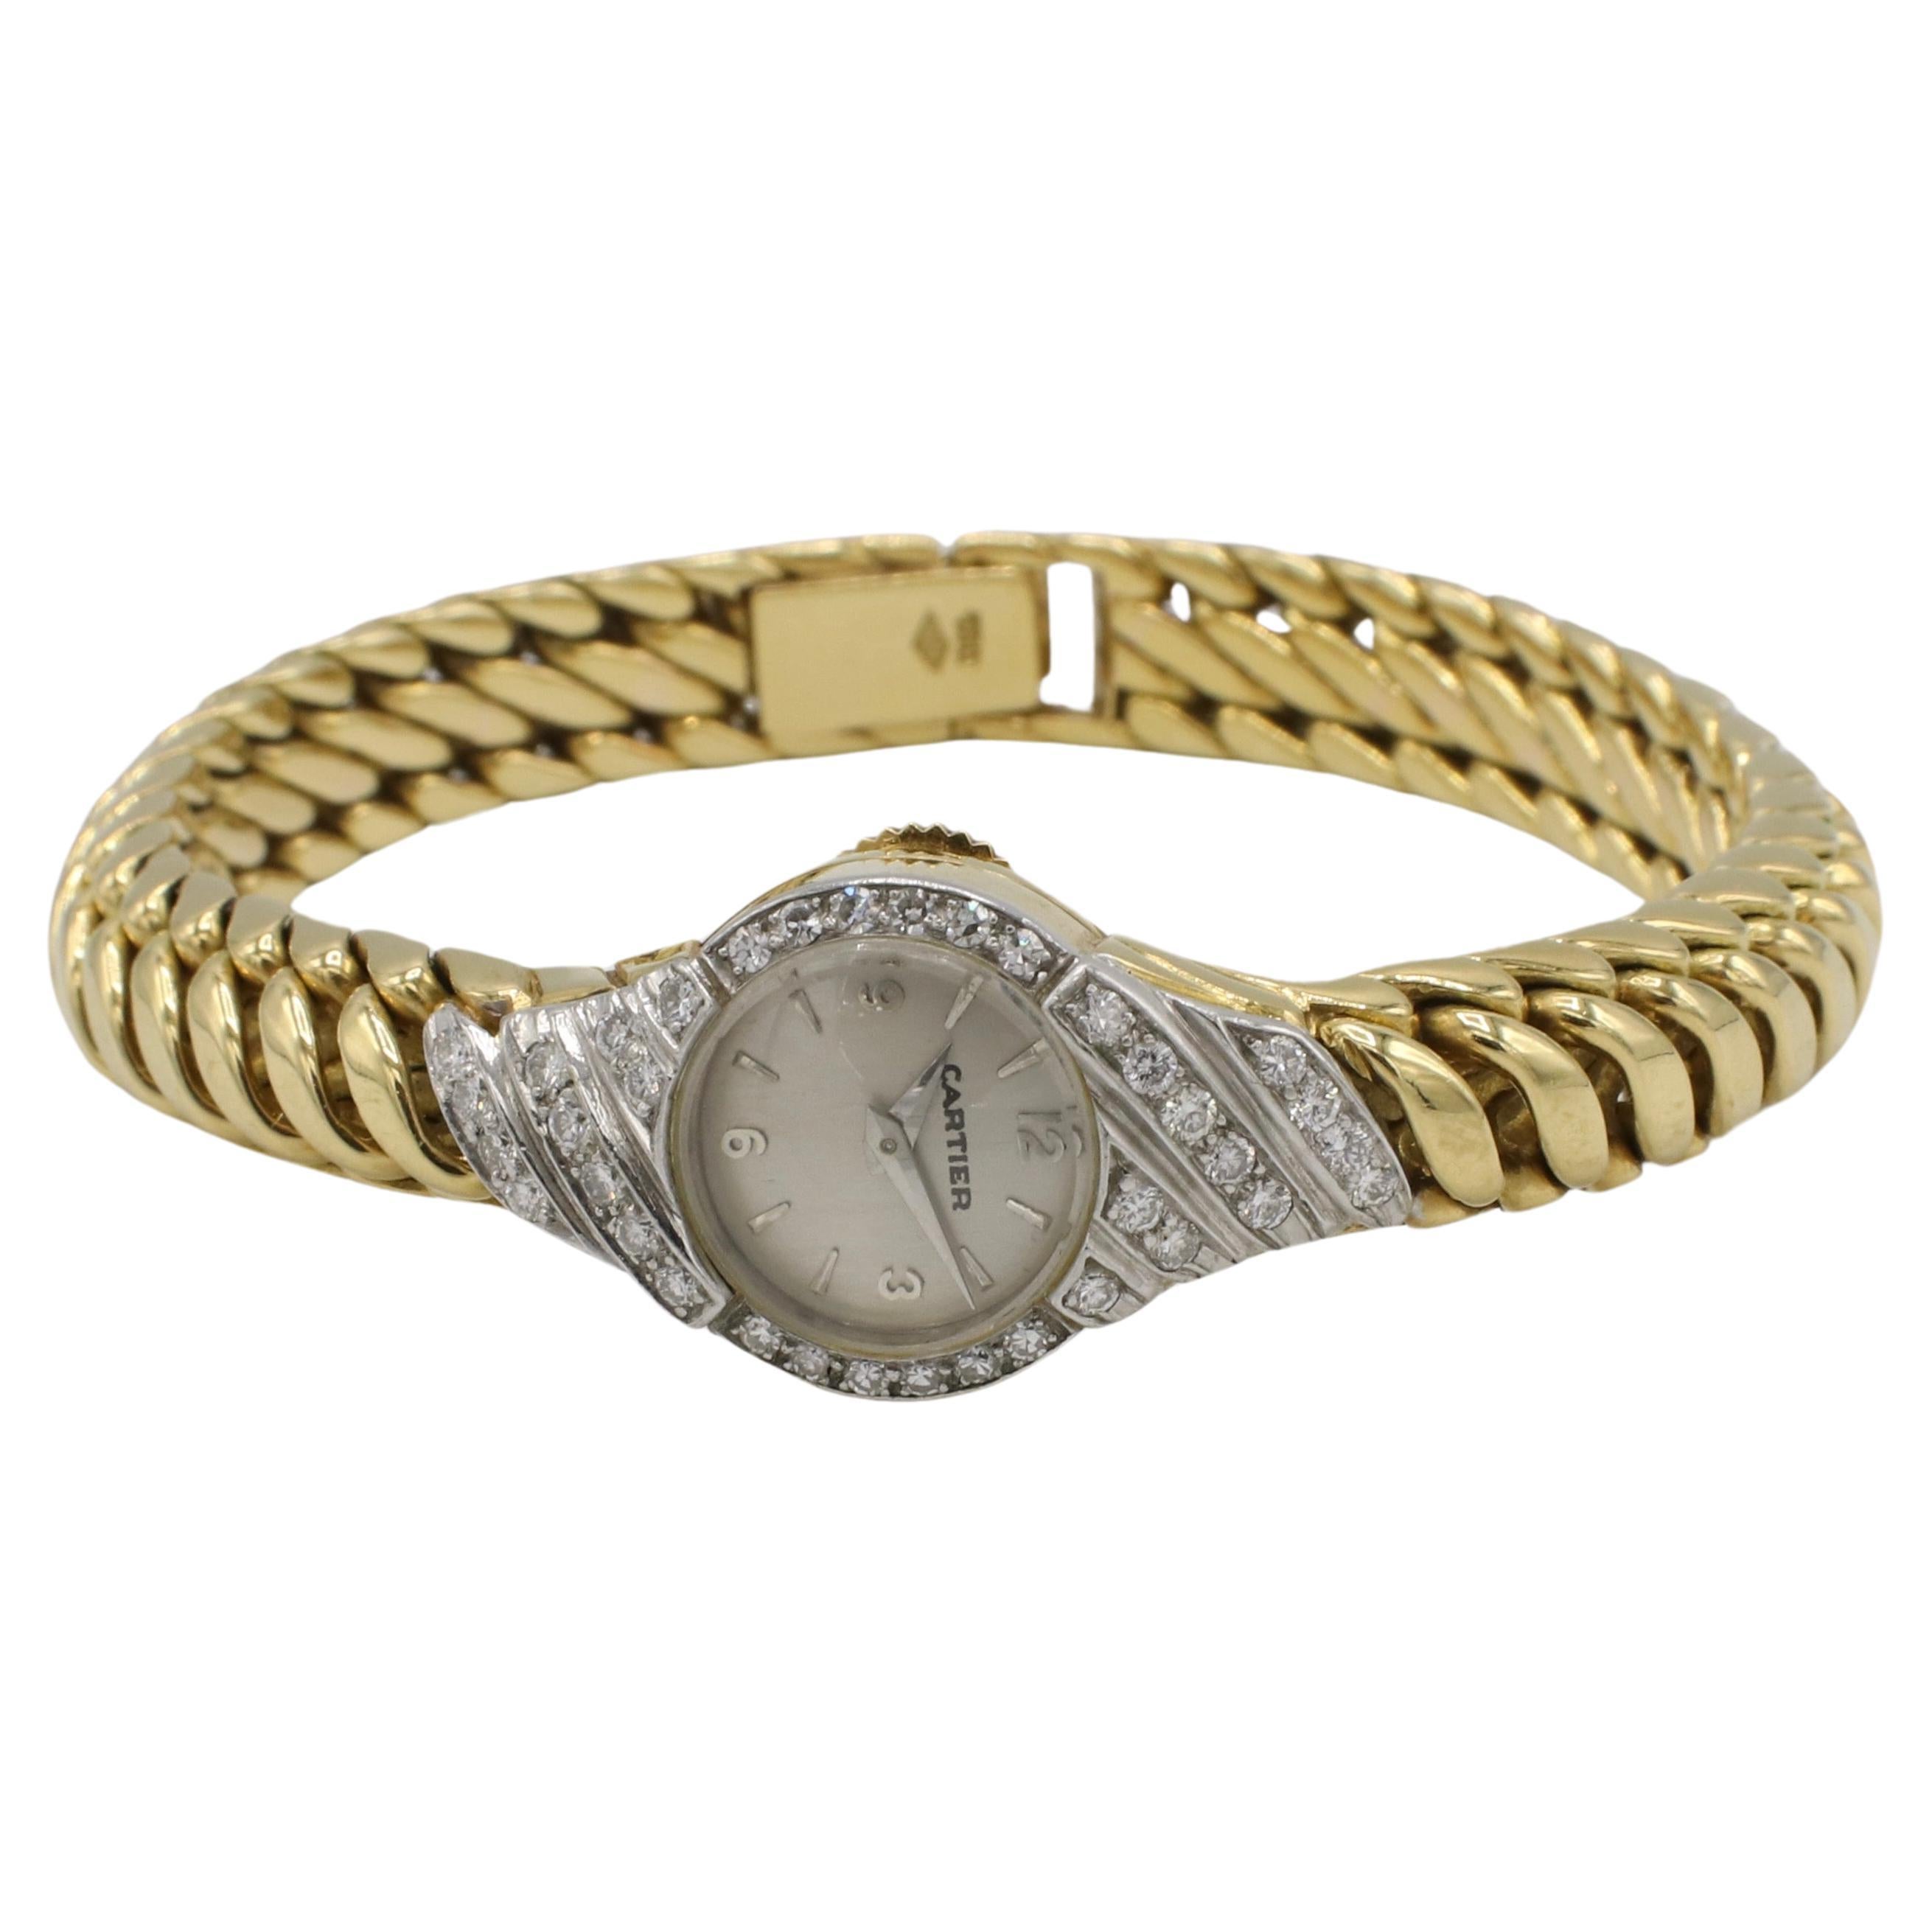 Cartier Retro 18 Karat Yellow Gold & Diamond Ladies Dress Watch 
Metal: 18k yellow gold & platinum 
Weight: 57.3 grams
Diamonds: Approx. 0.36 carats G-H VS round natural diamonds
Case: 16mm
Bracelet width: 8mm
Wrist size: 6.5 inches